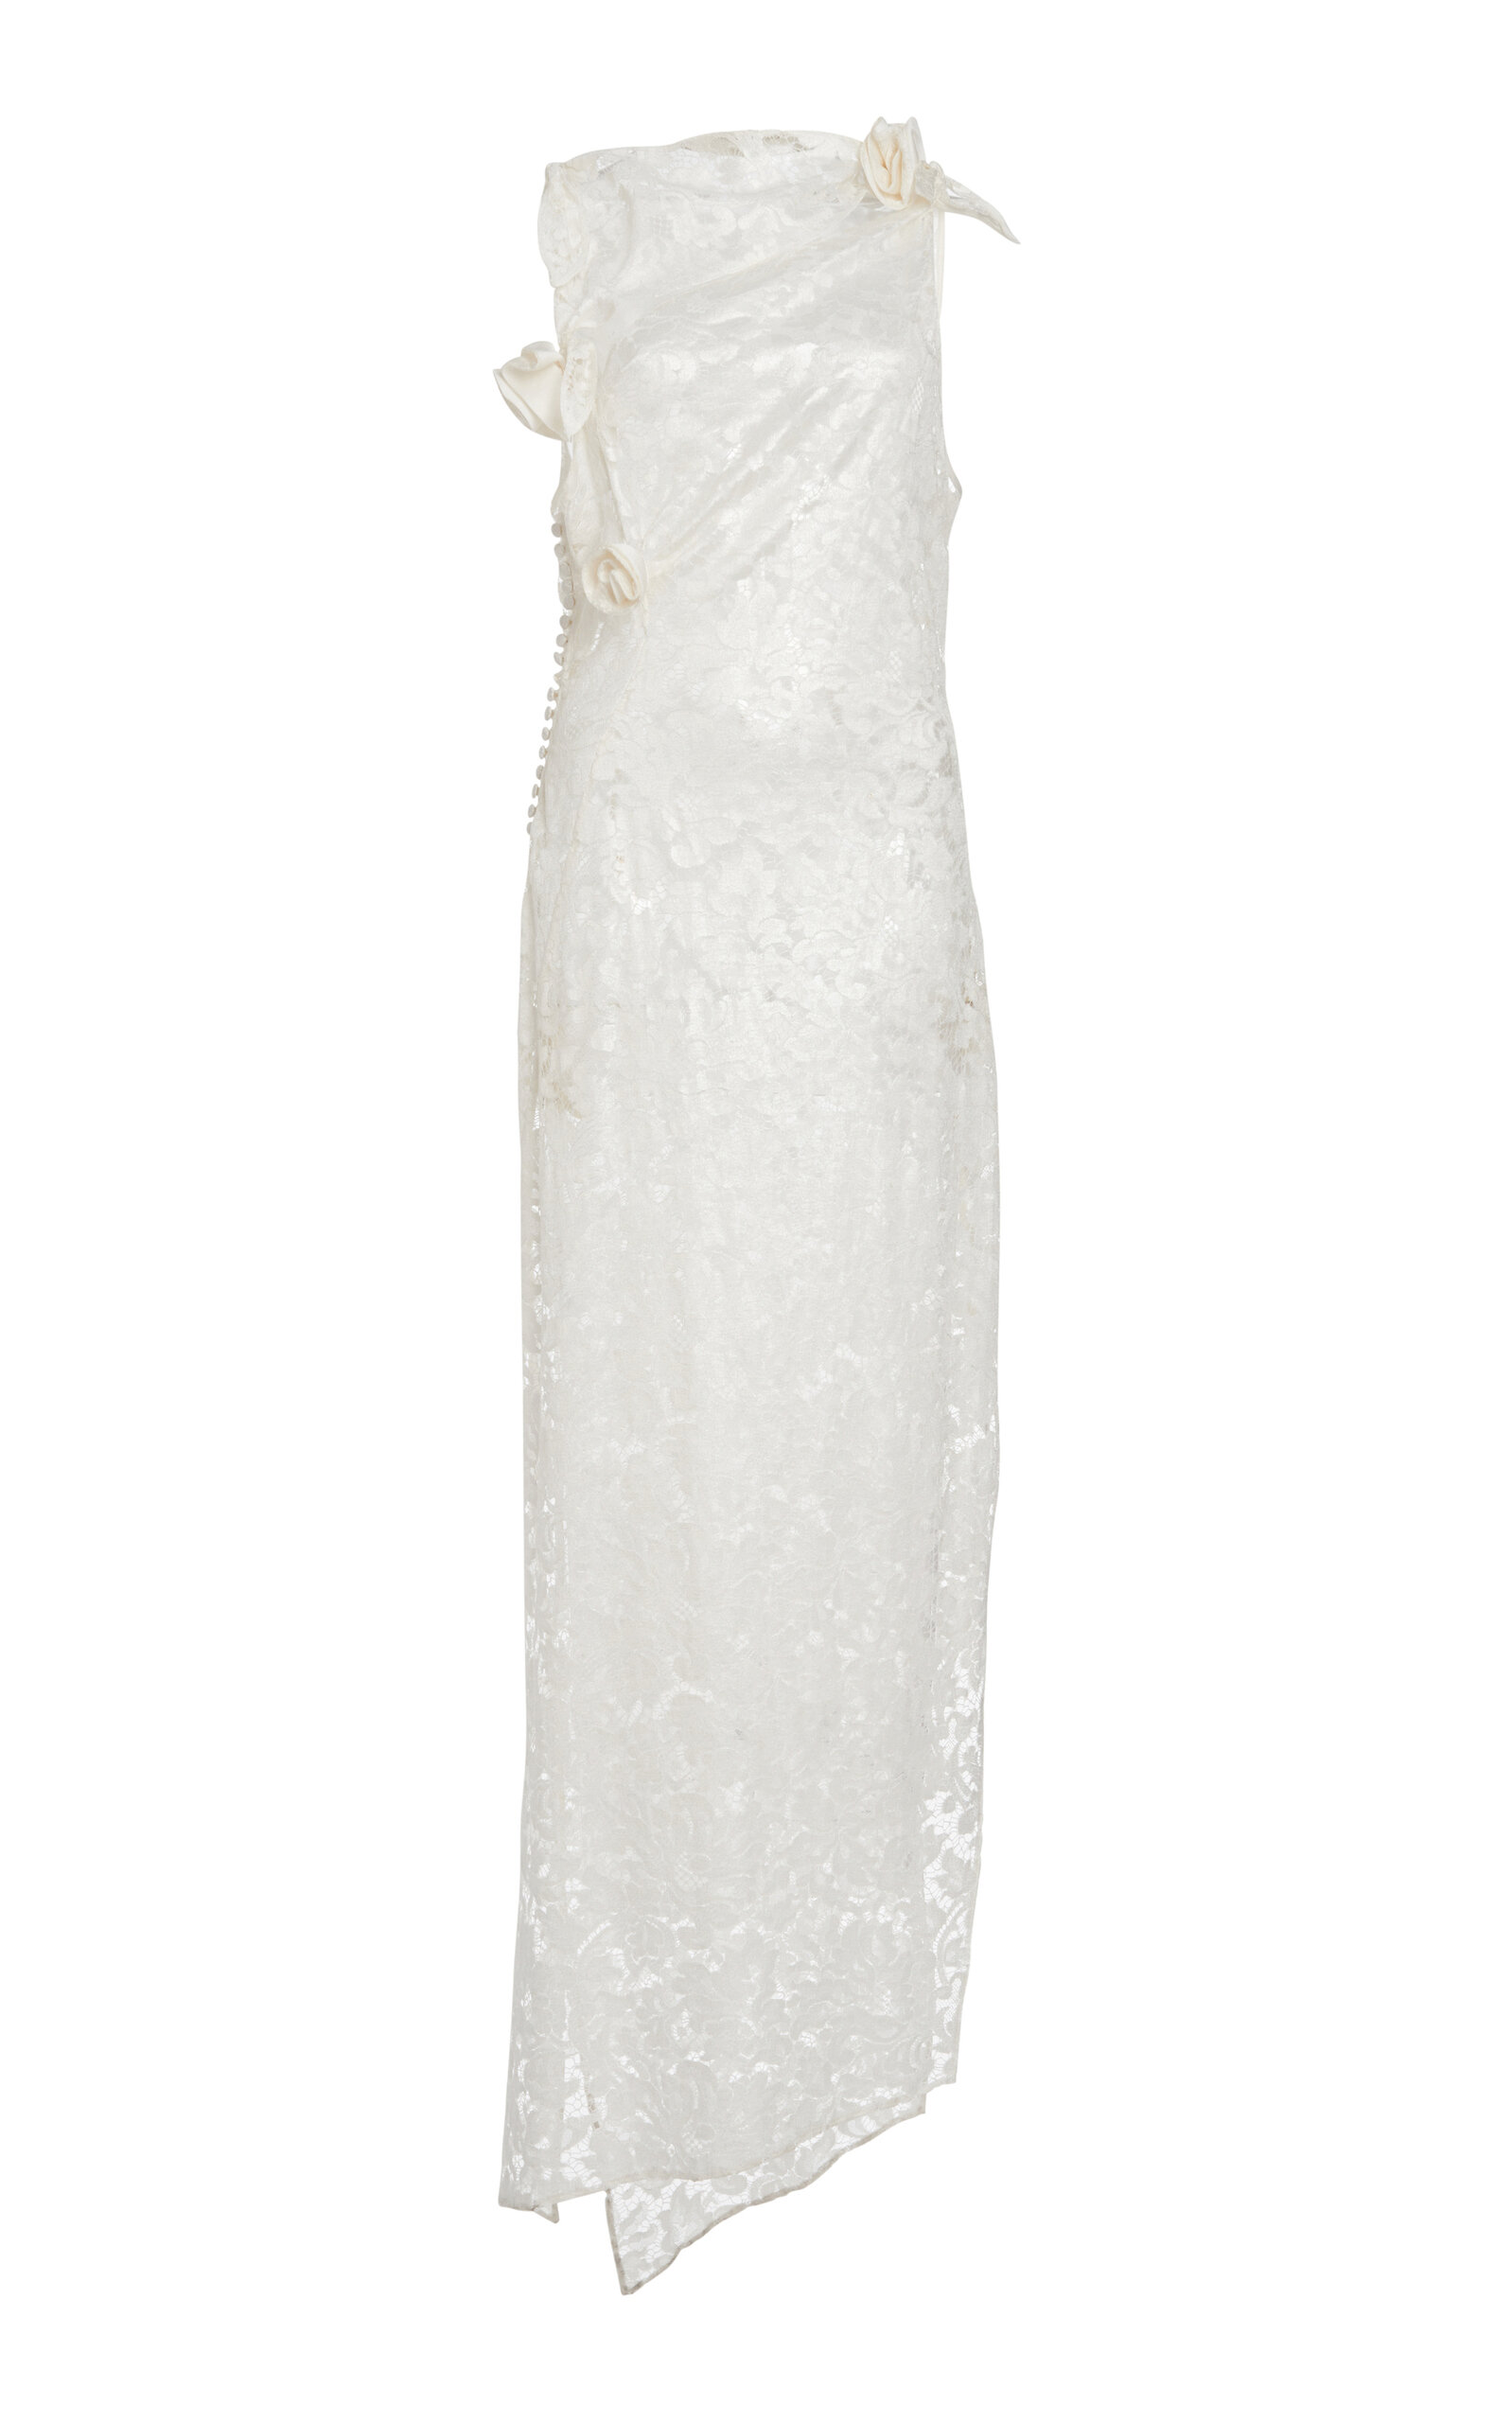 Rosette-Detailed Lace Maxi Dress